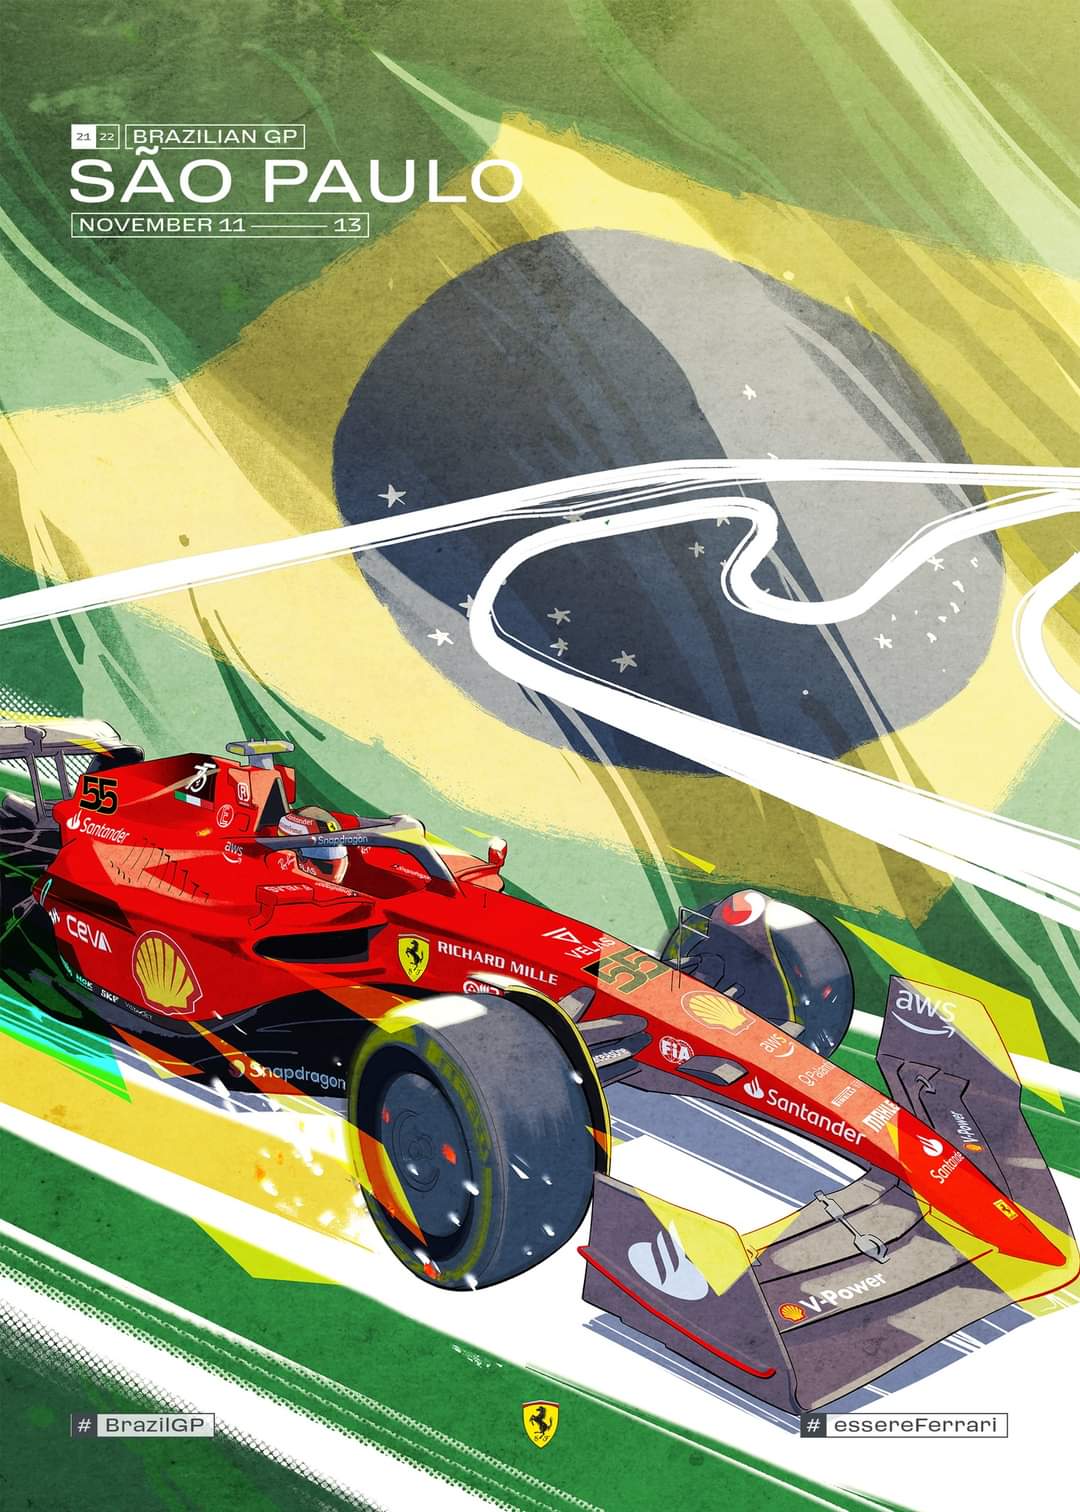 2022 Ferrari F1 RACE 21 BRAZIL grand prix race poster cover art